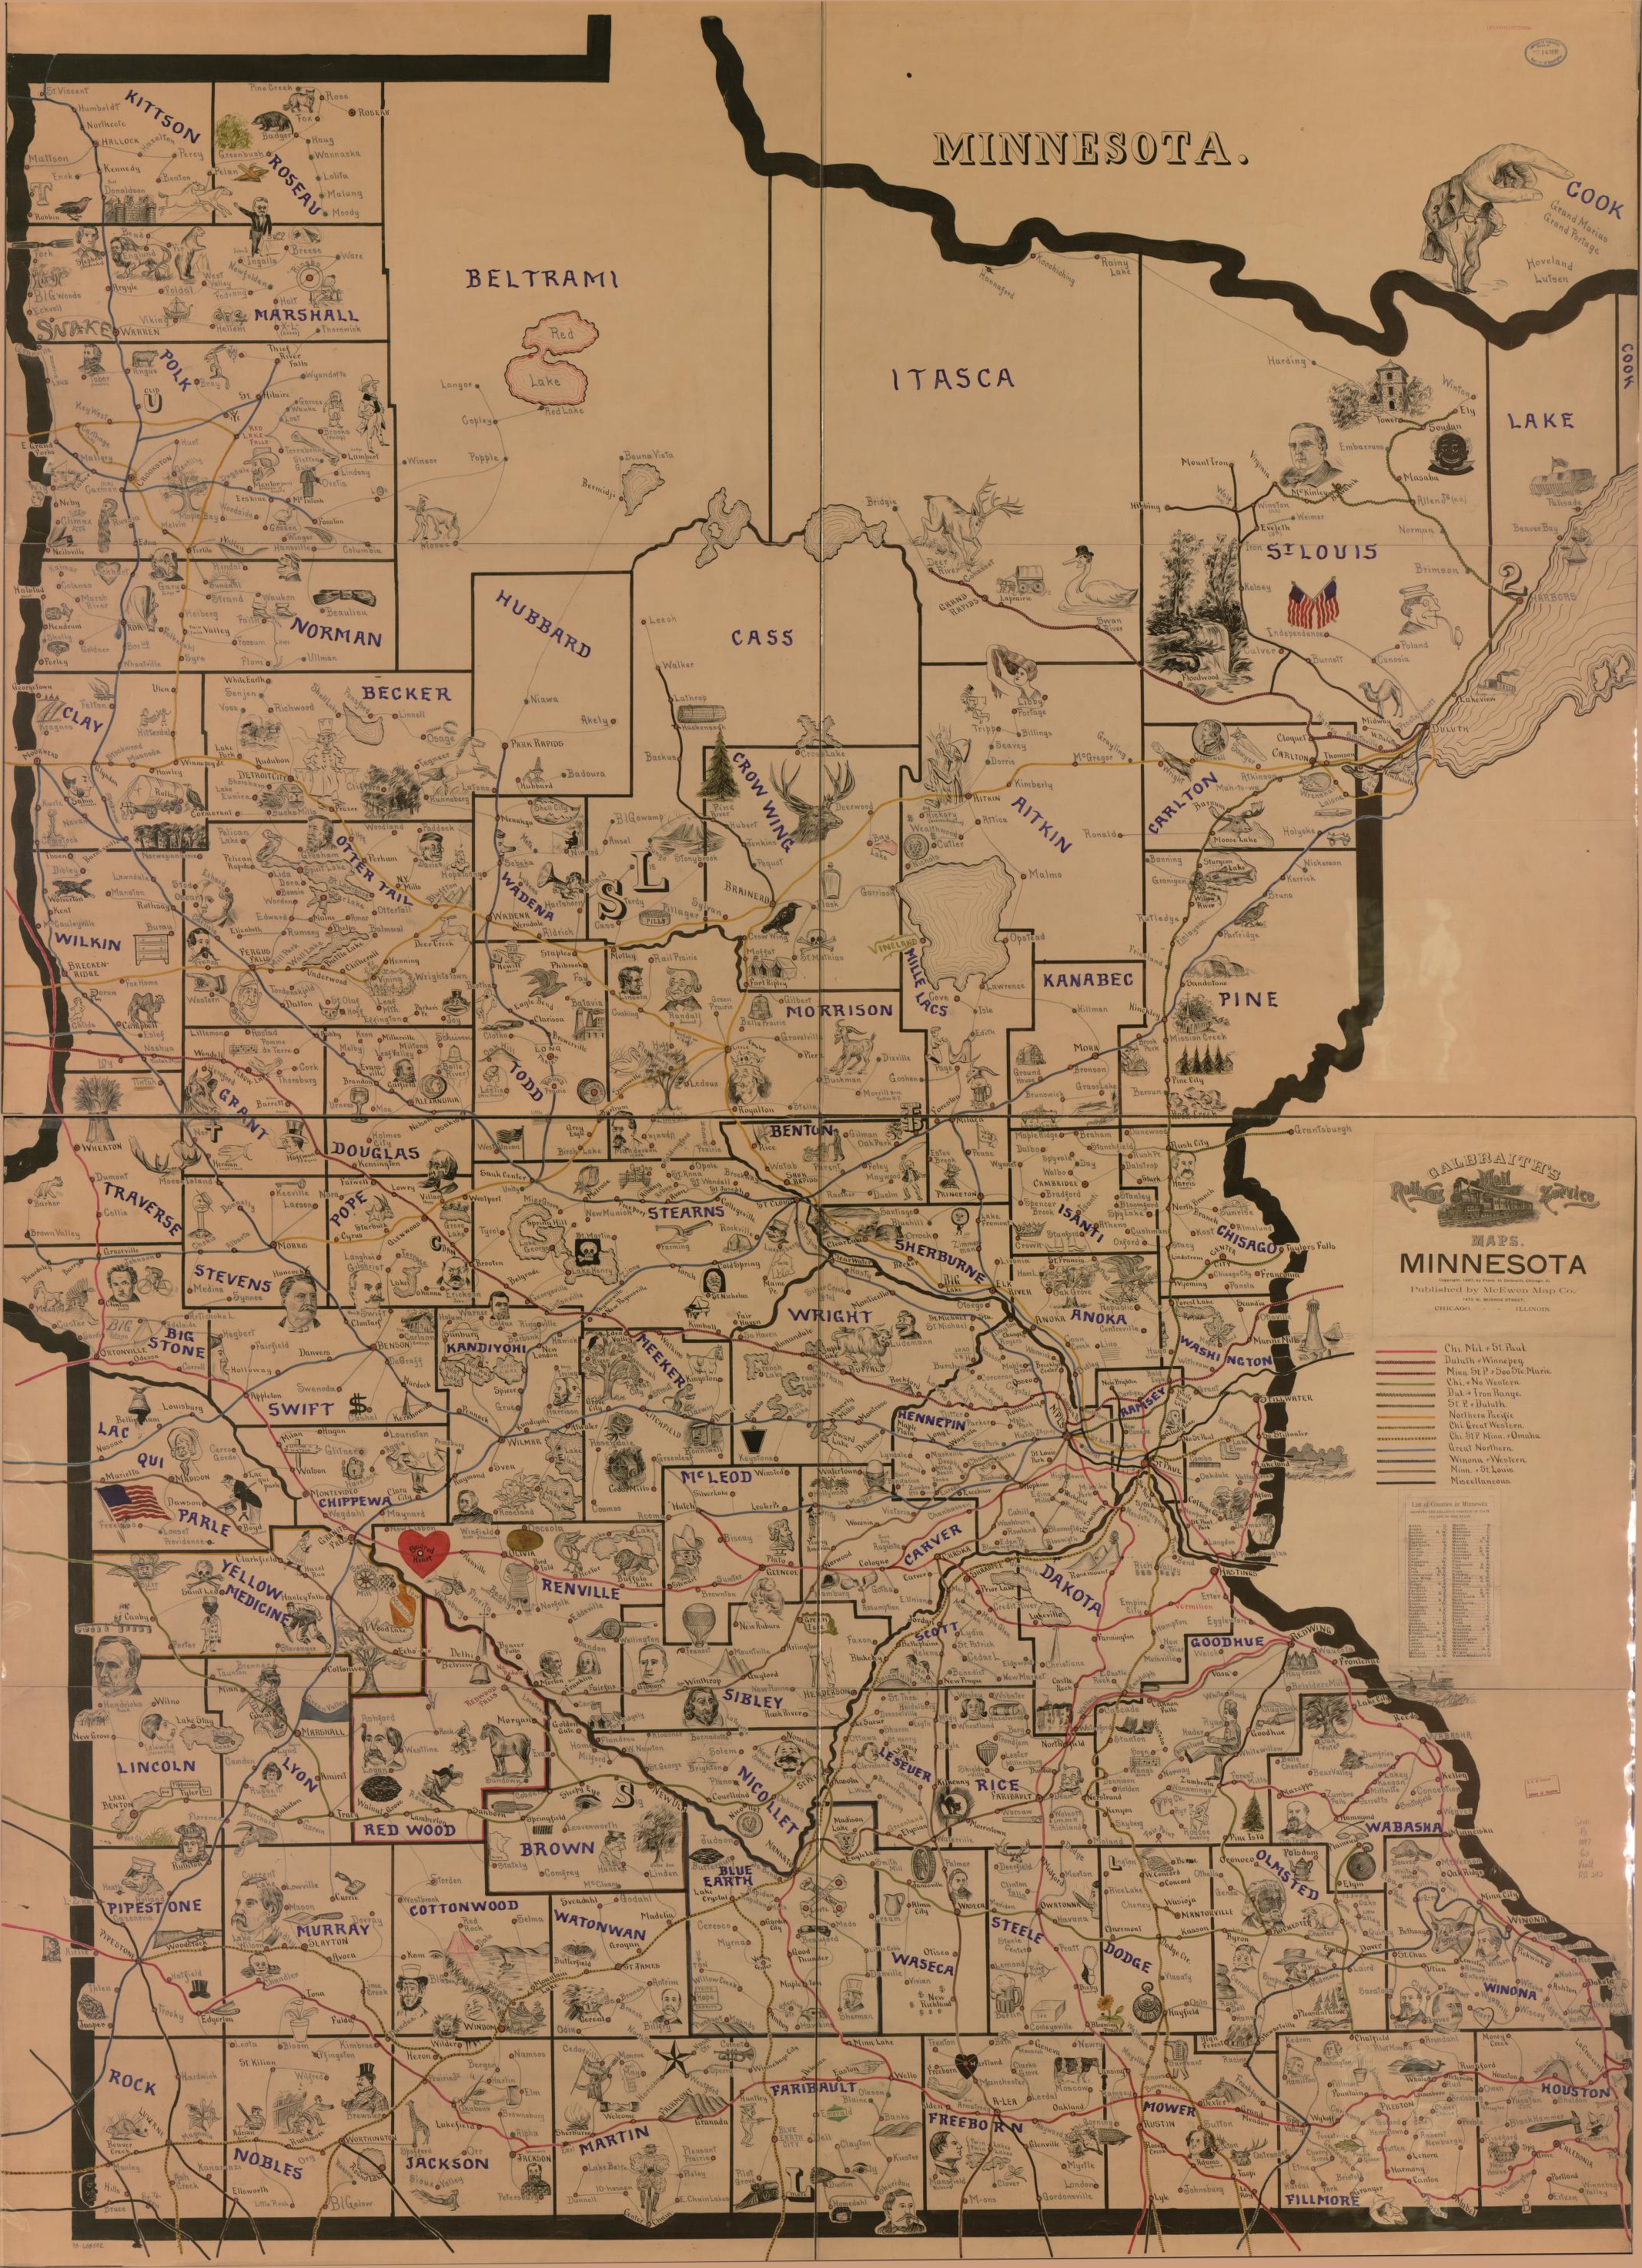 1897 Galbraith's railway mail service maps of Minnesota